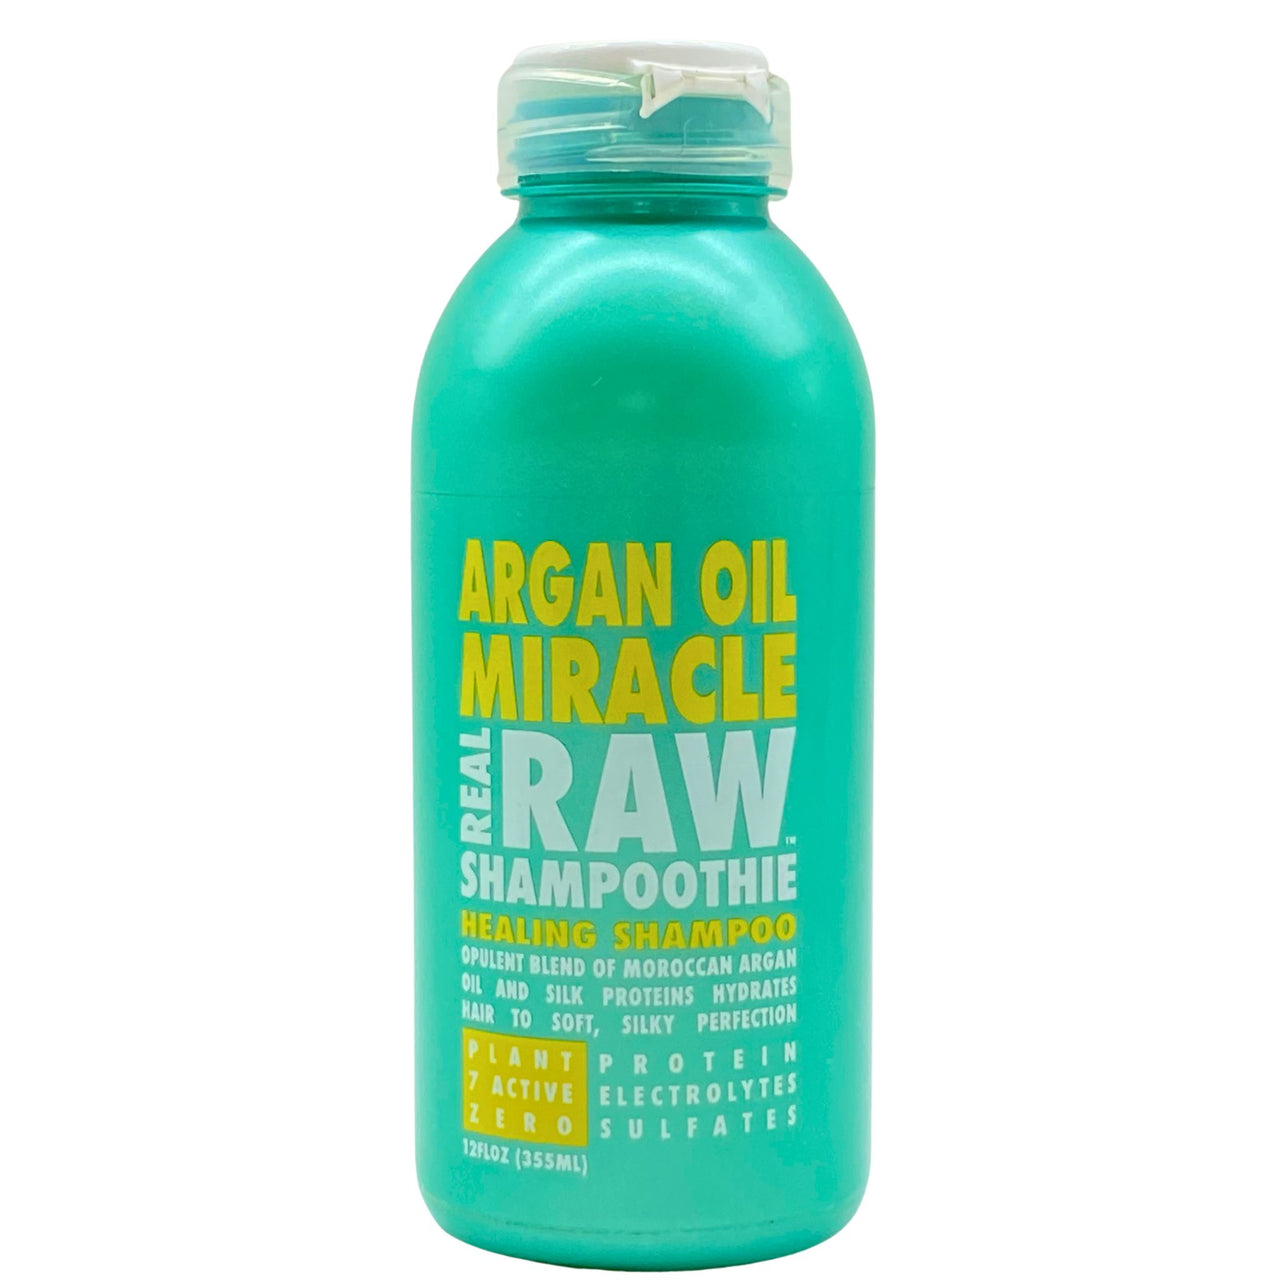 Real Raw Shampoothie Argan Oil Miracle Healing Shampoo 